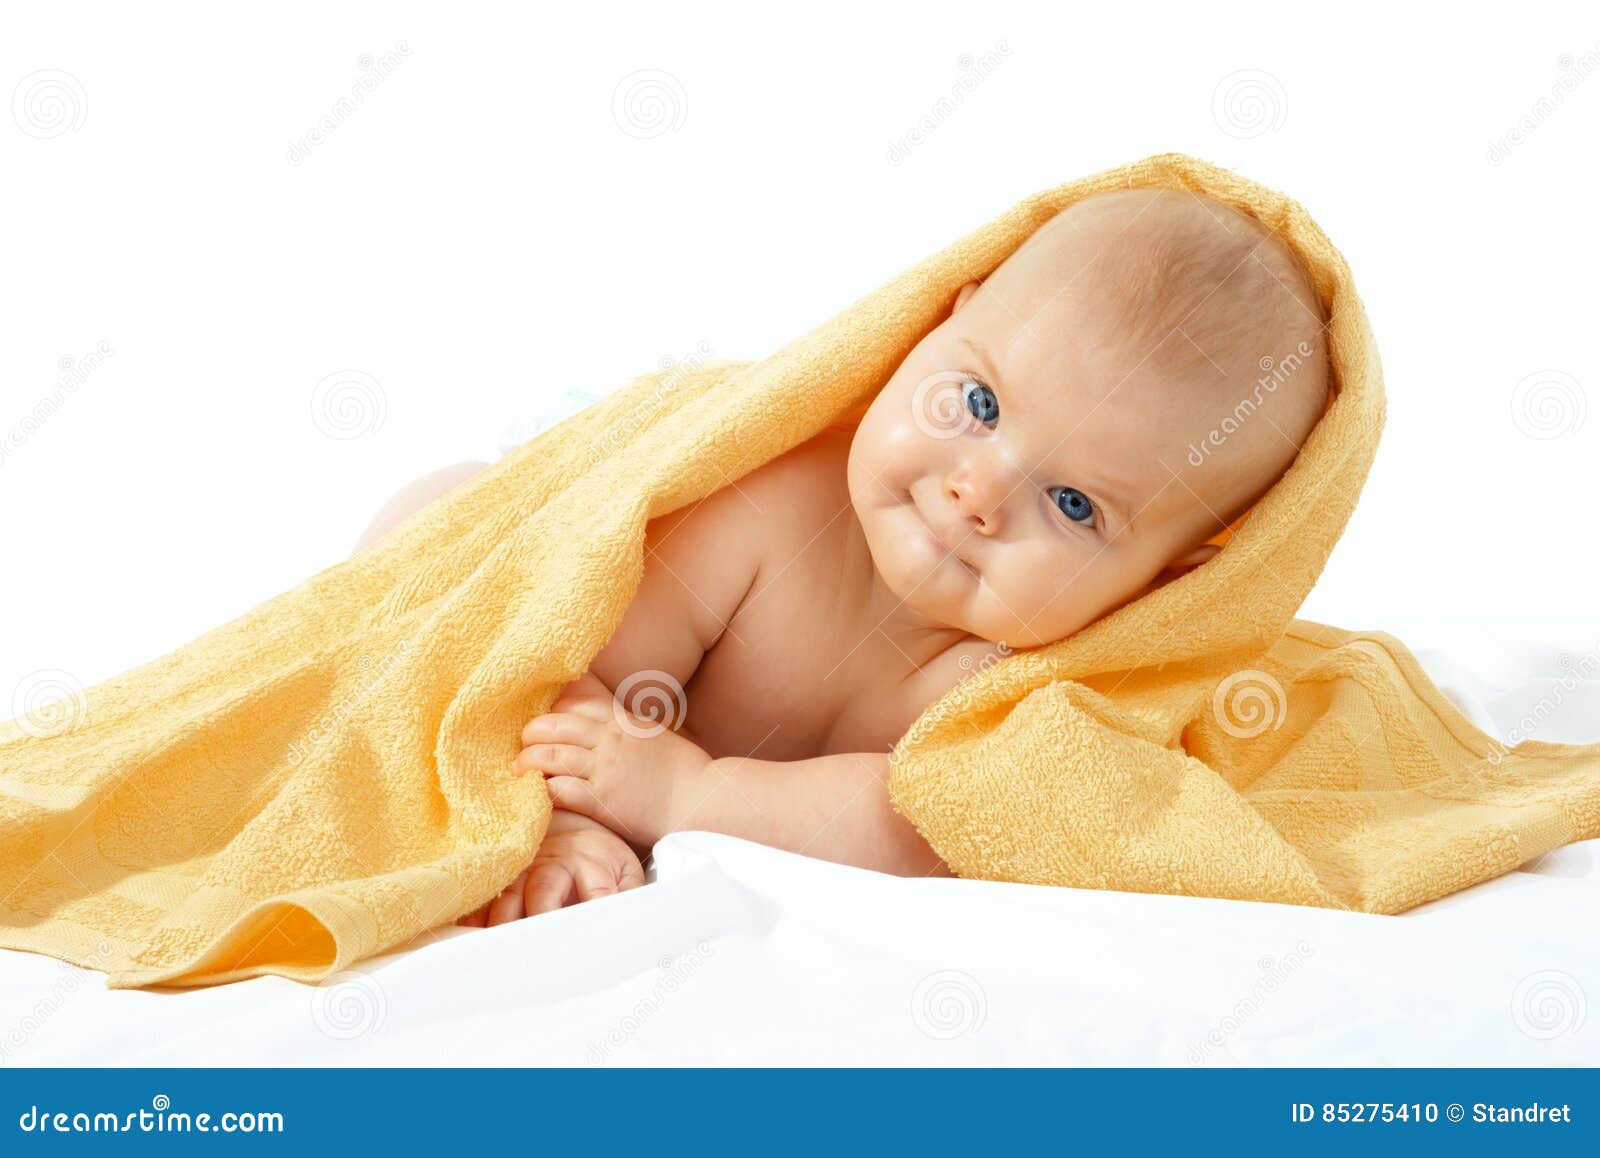 Baby in yellow towel stock photo. Image of closeup, nursing - 85275410